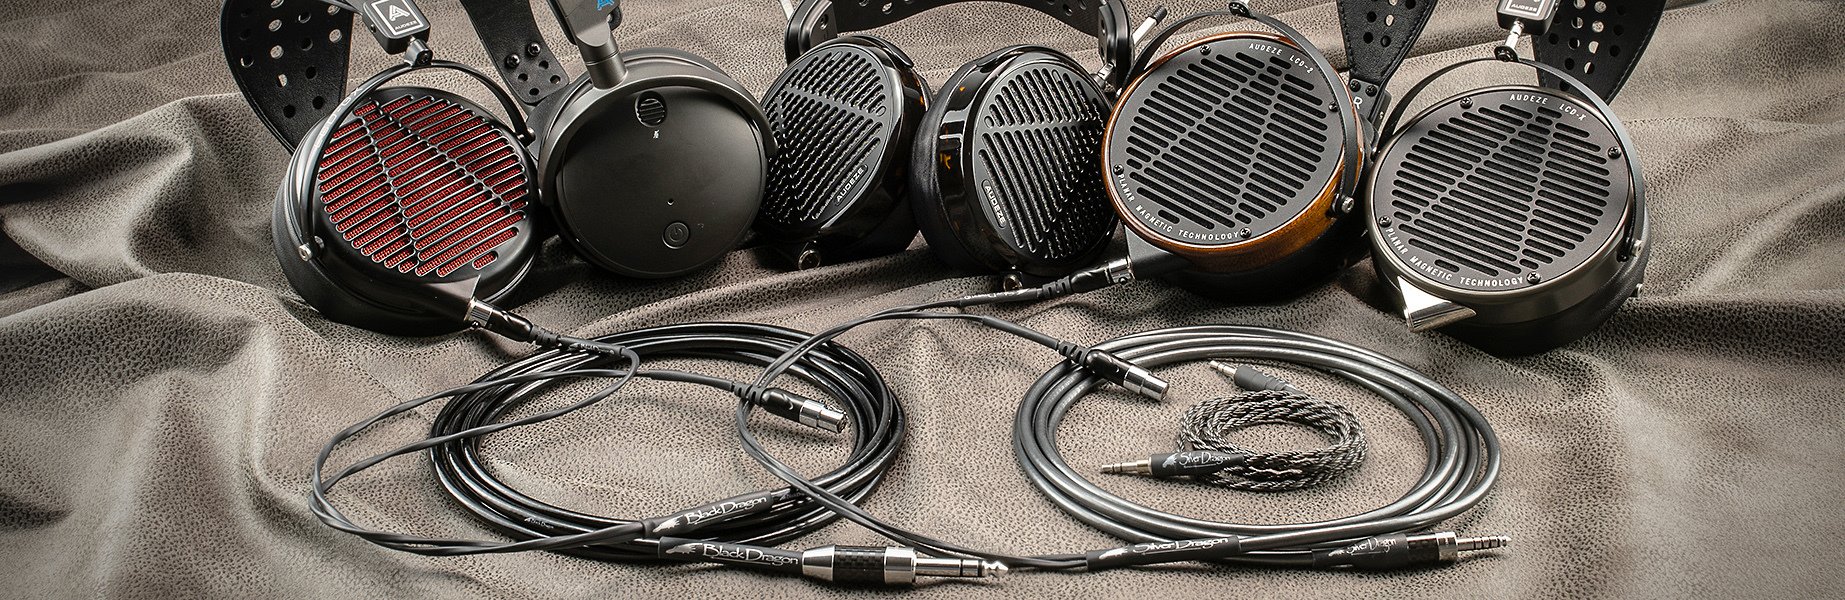 Audeze Headphones with Moon Audio Dragon Cables